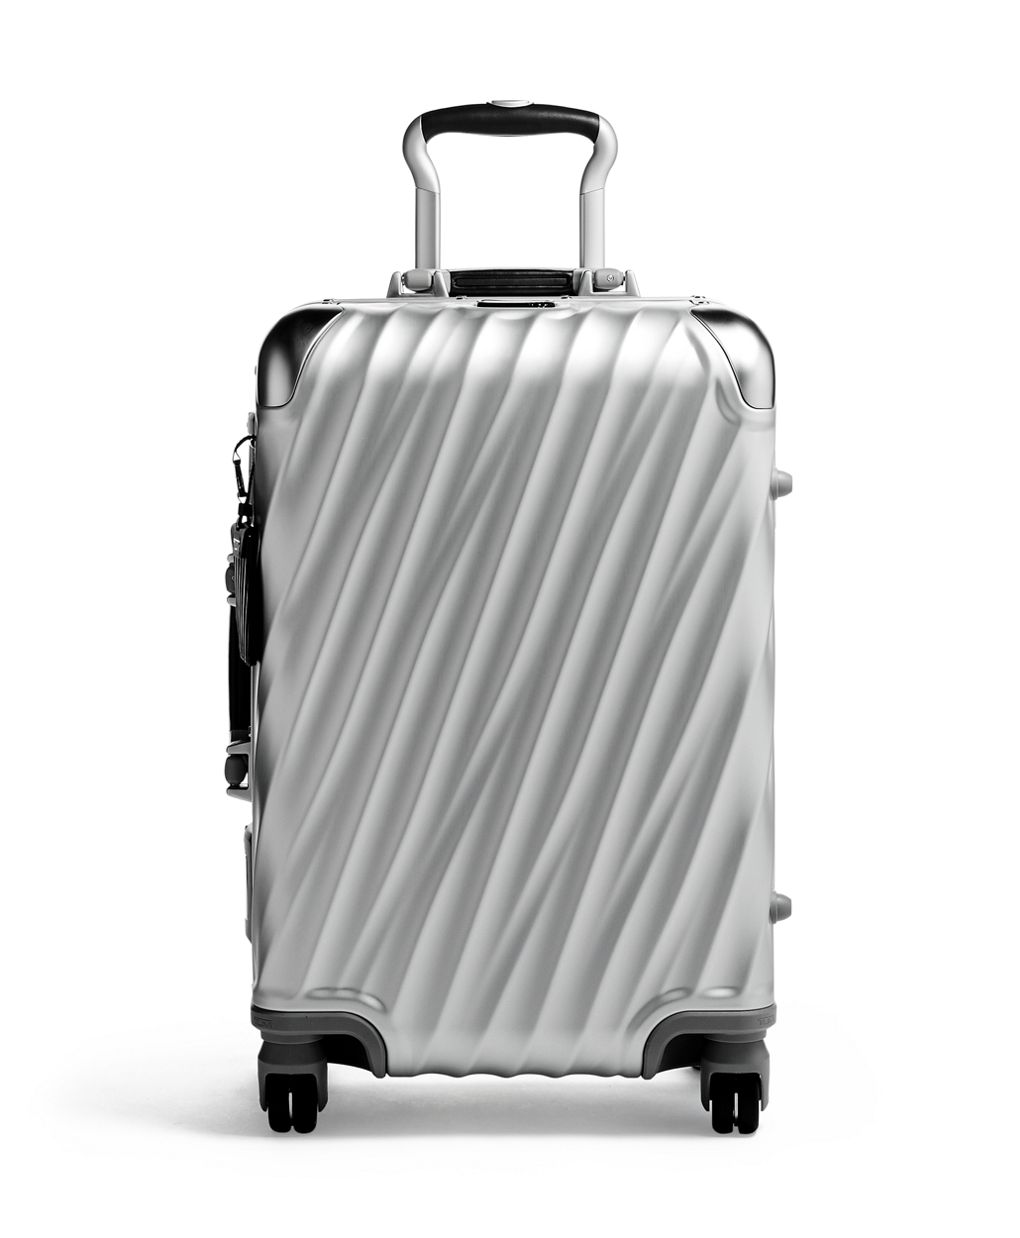 Luggage  Tumi luggage, Accessories, Luggage